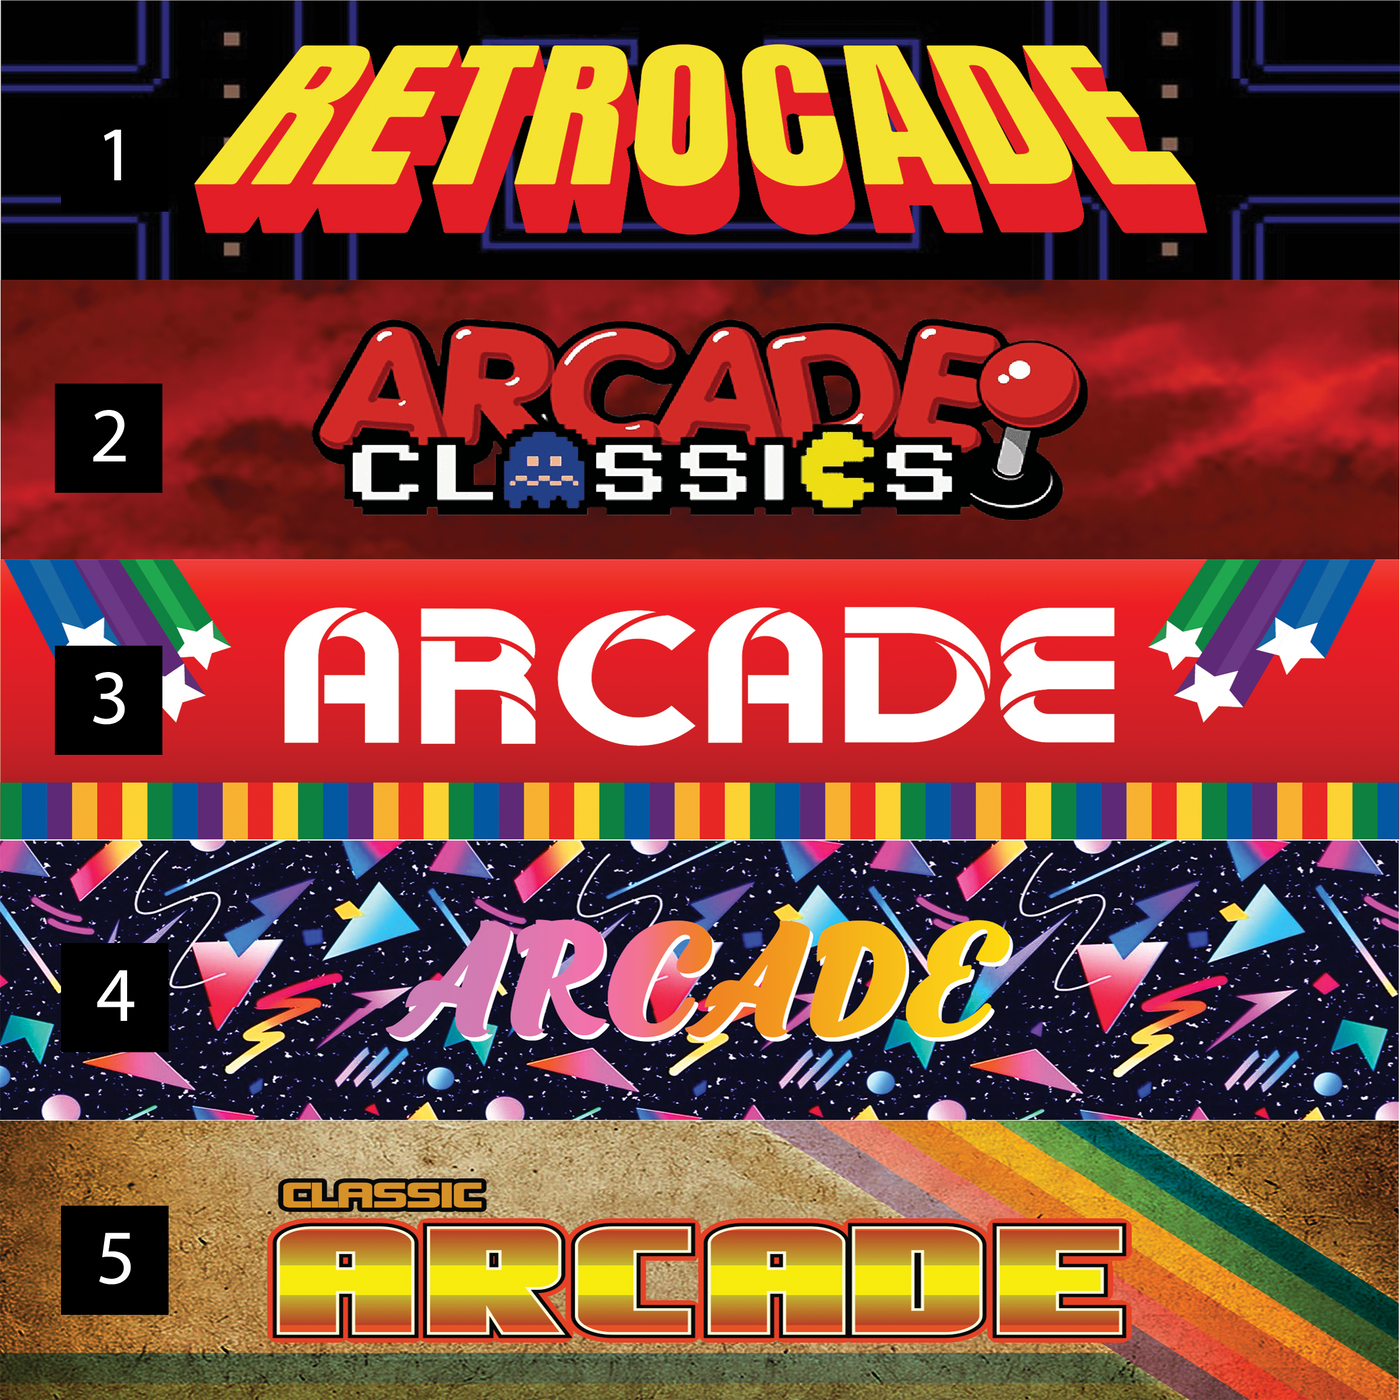 Retro arcade fonts 4-choices